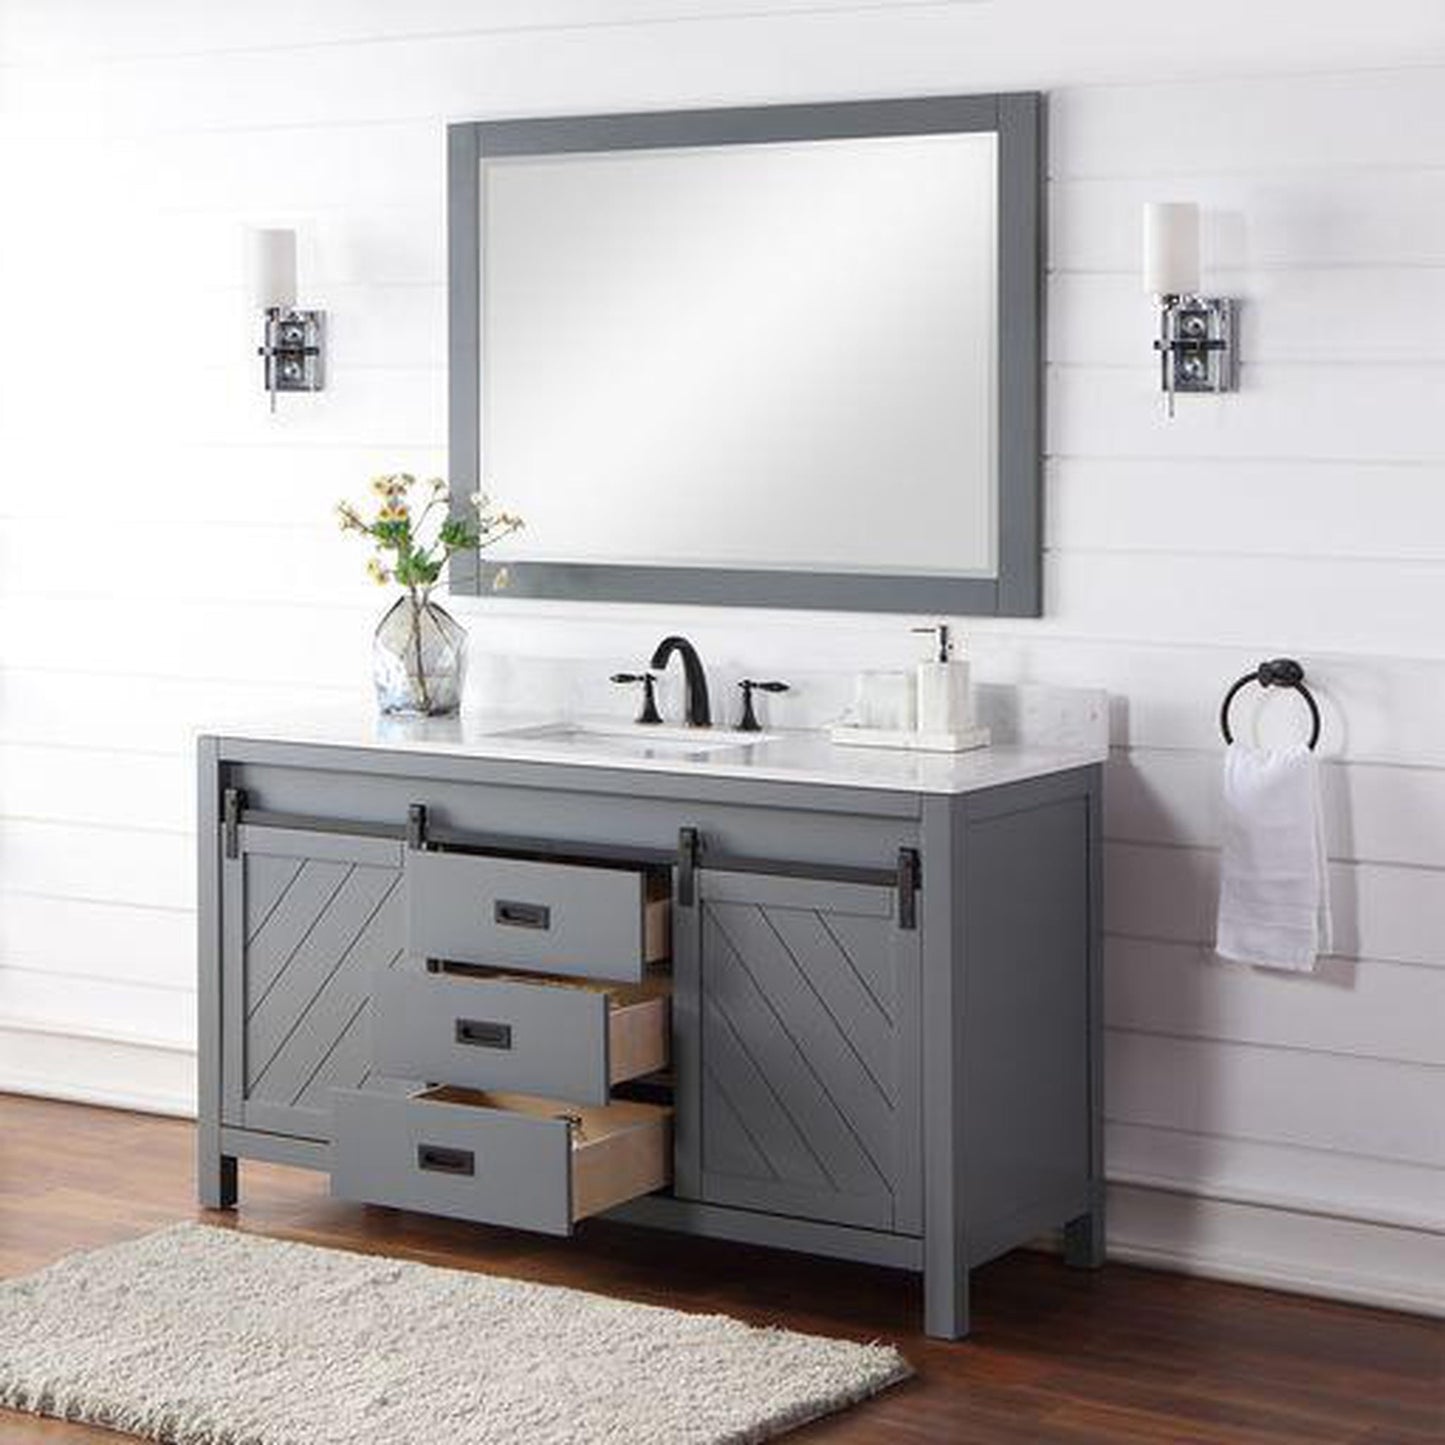 Altair Kinsley 60" Single Gray Freestanding Bathroom Vanity Set With Mirror, Aosta White Composite Stone Top, Rectangular Undermount Ceramic Sink, and Overflow